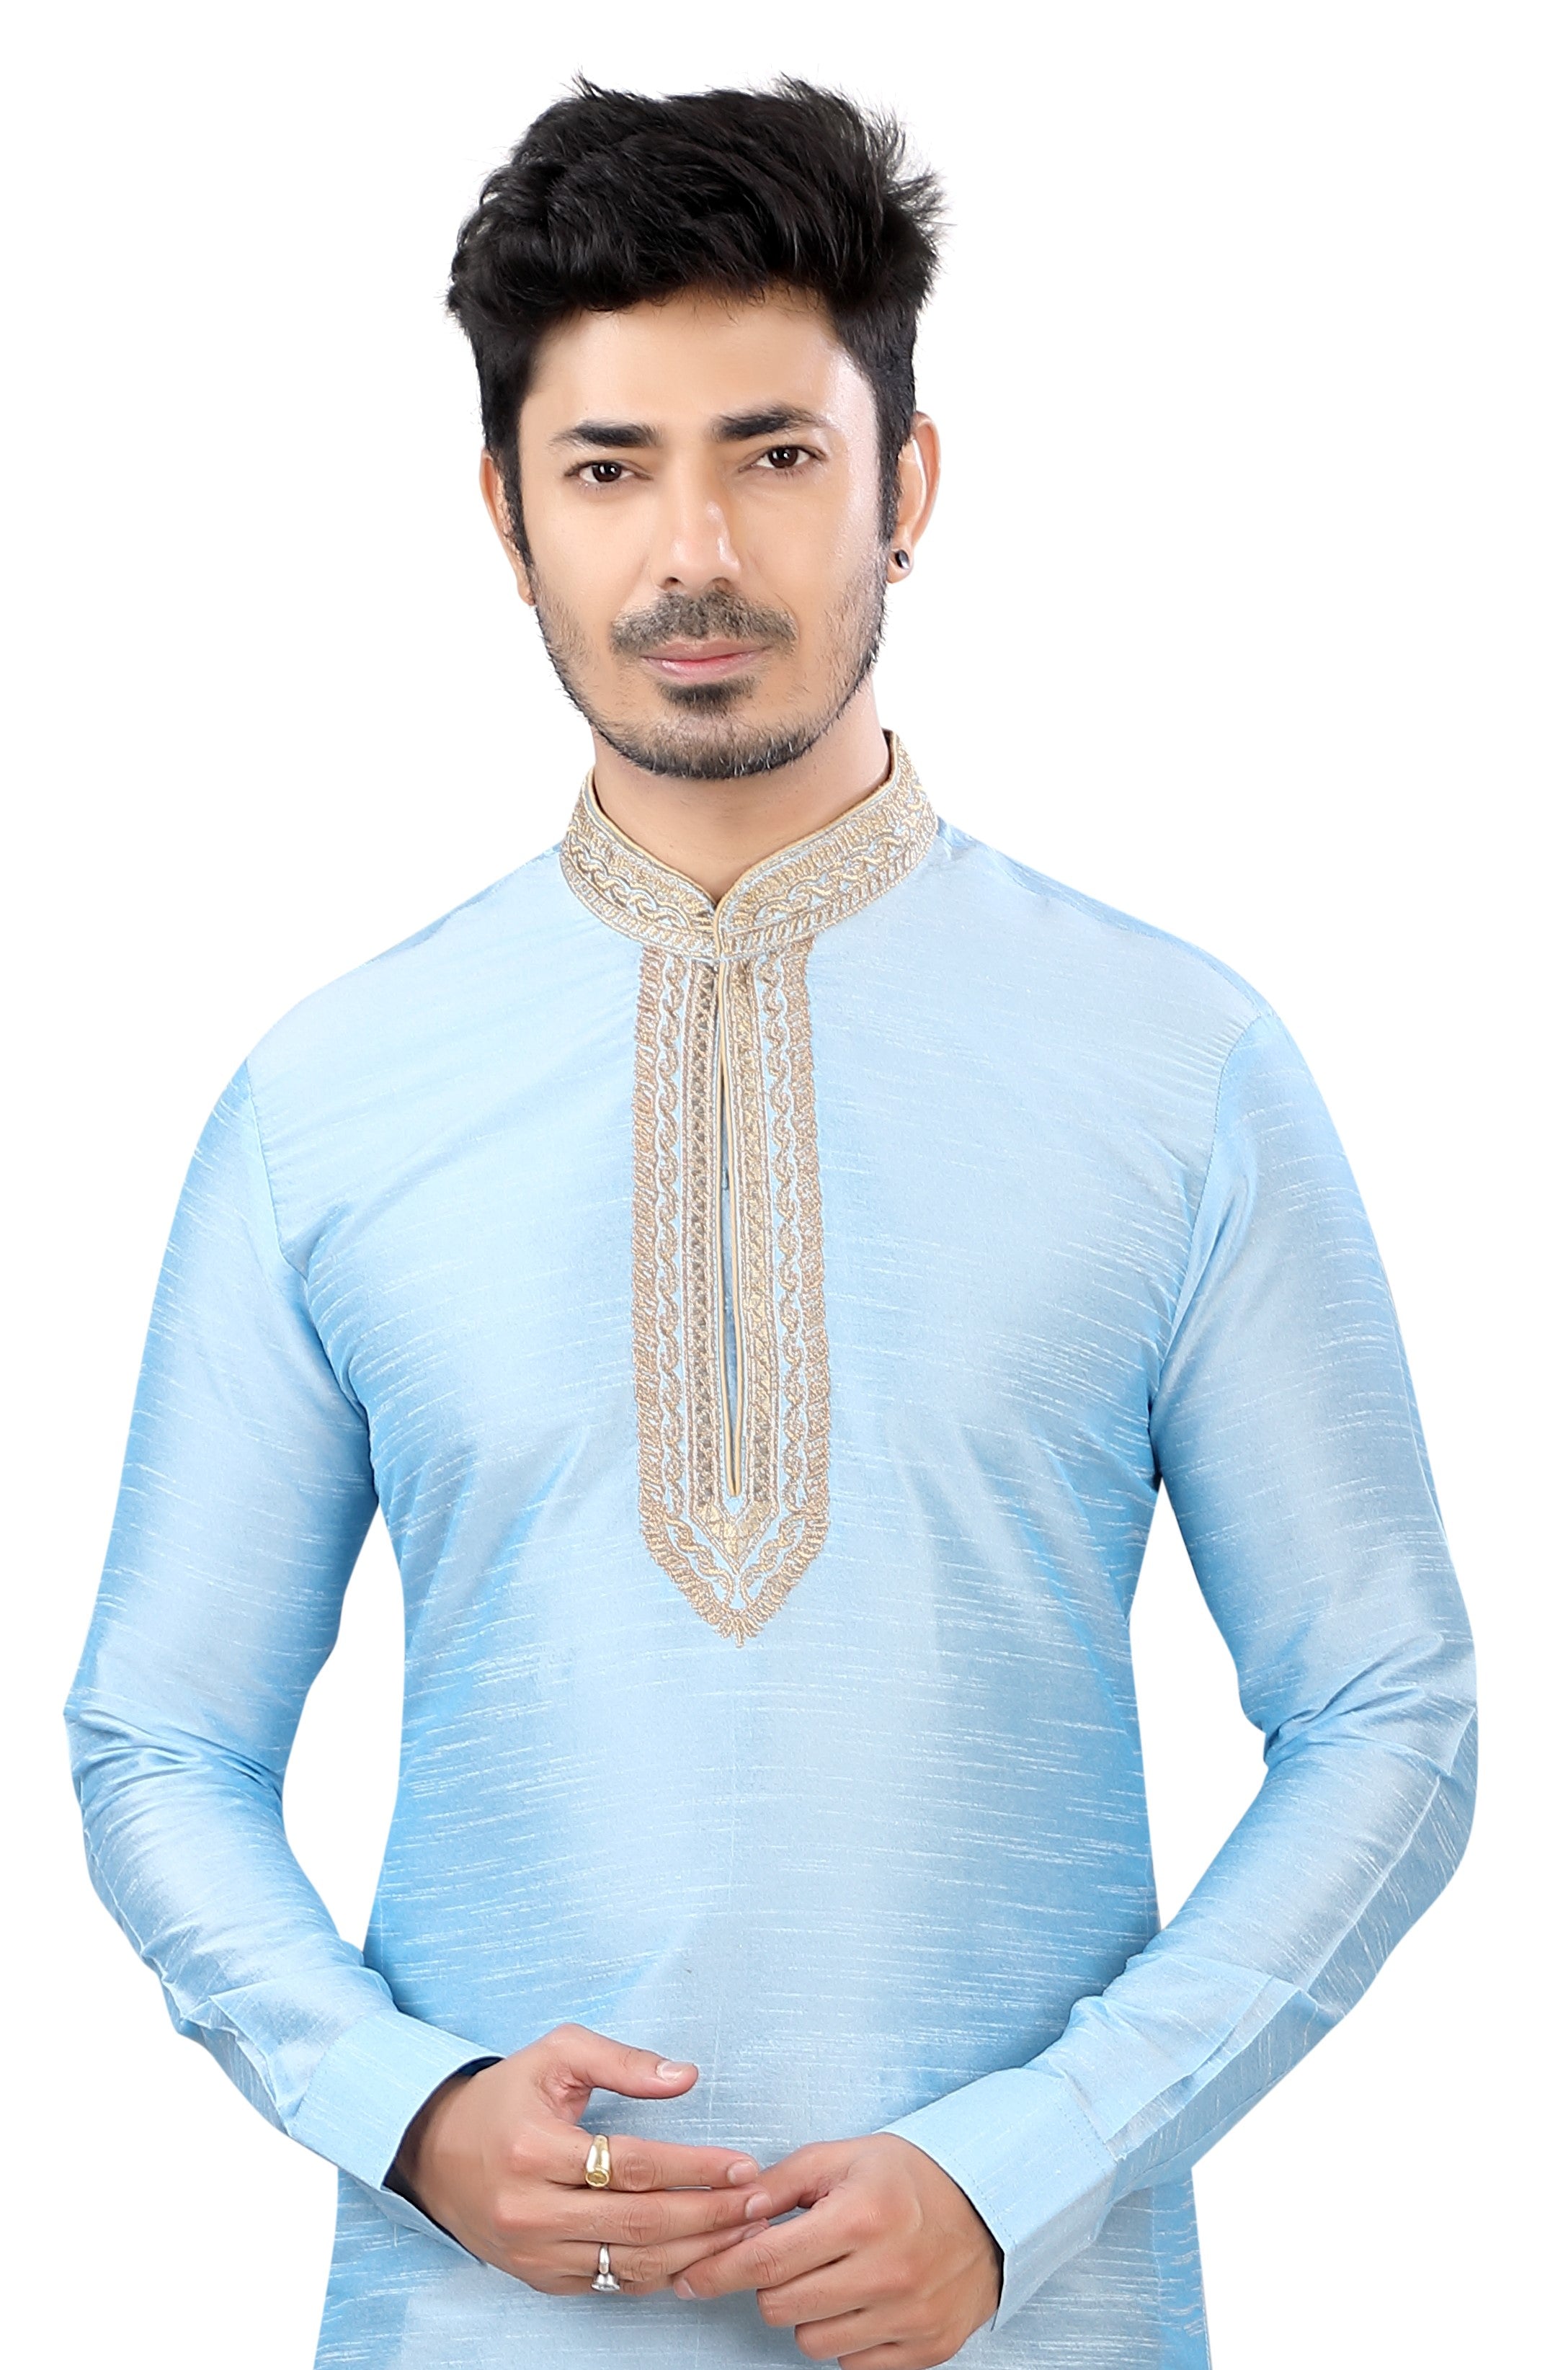 Banarasi Dupion Silk Short Kurta with embroidery in Ice Blue Color